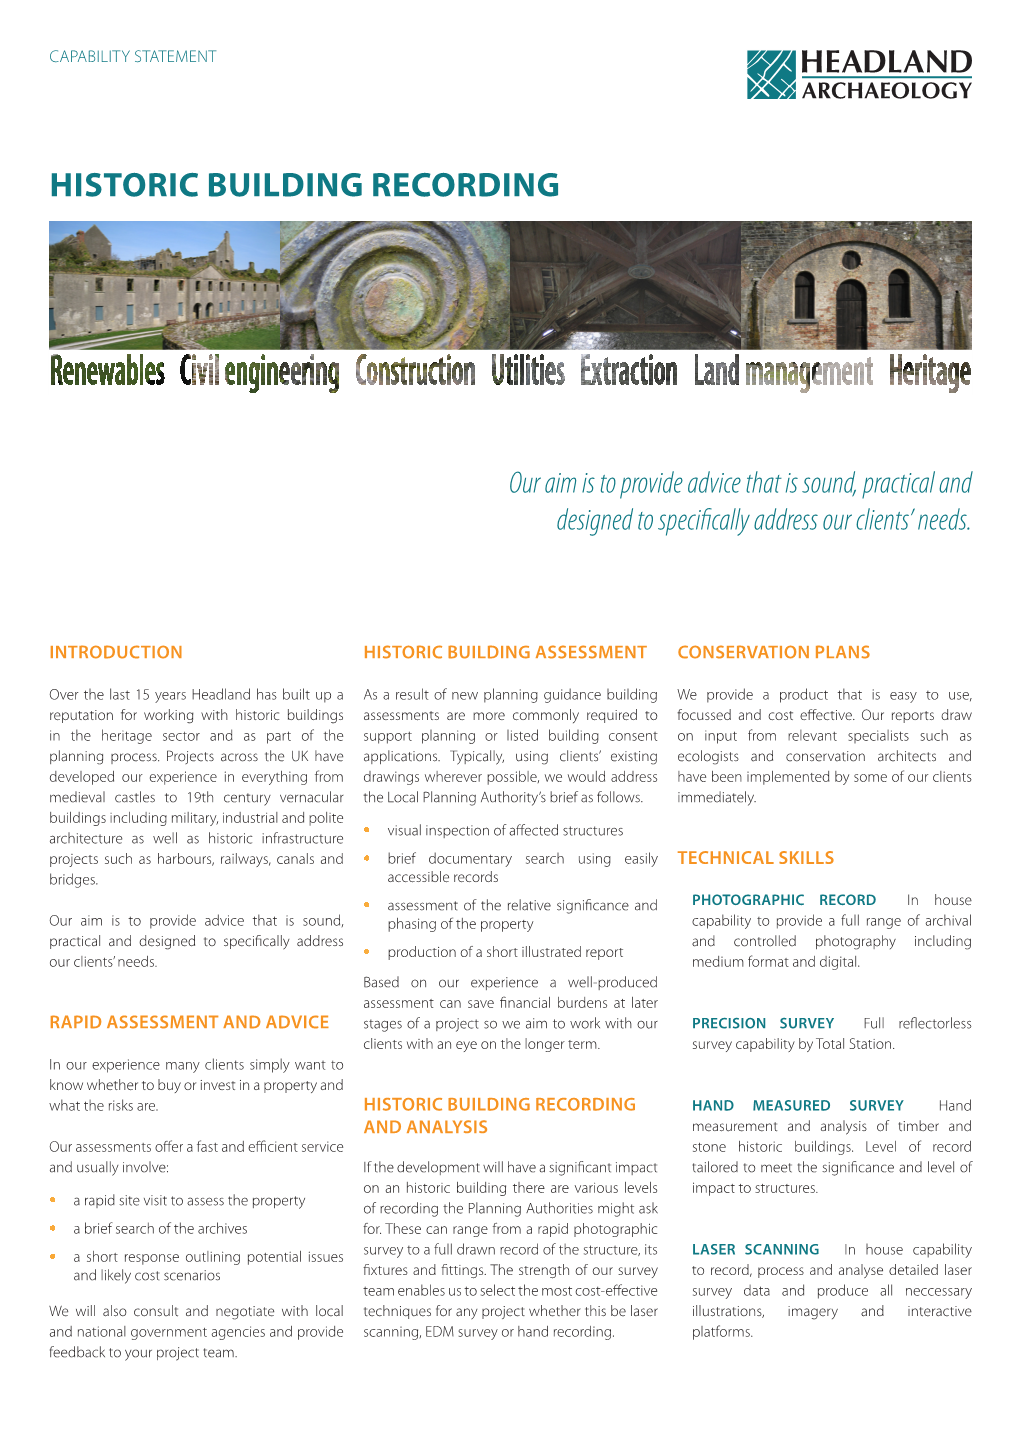 Renewables Civil Engineering Construction Utilities Extraction Land Management Heritage